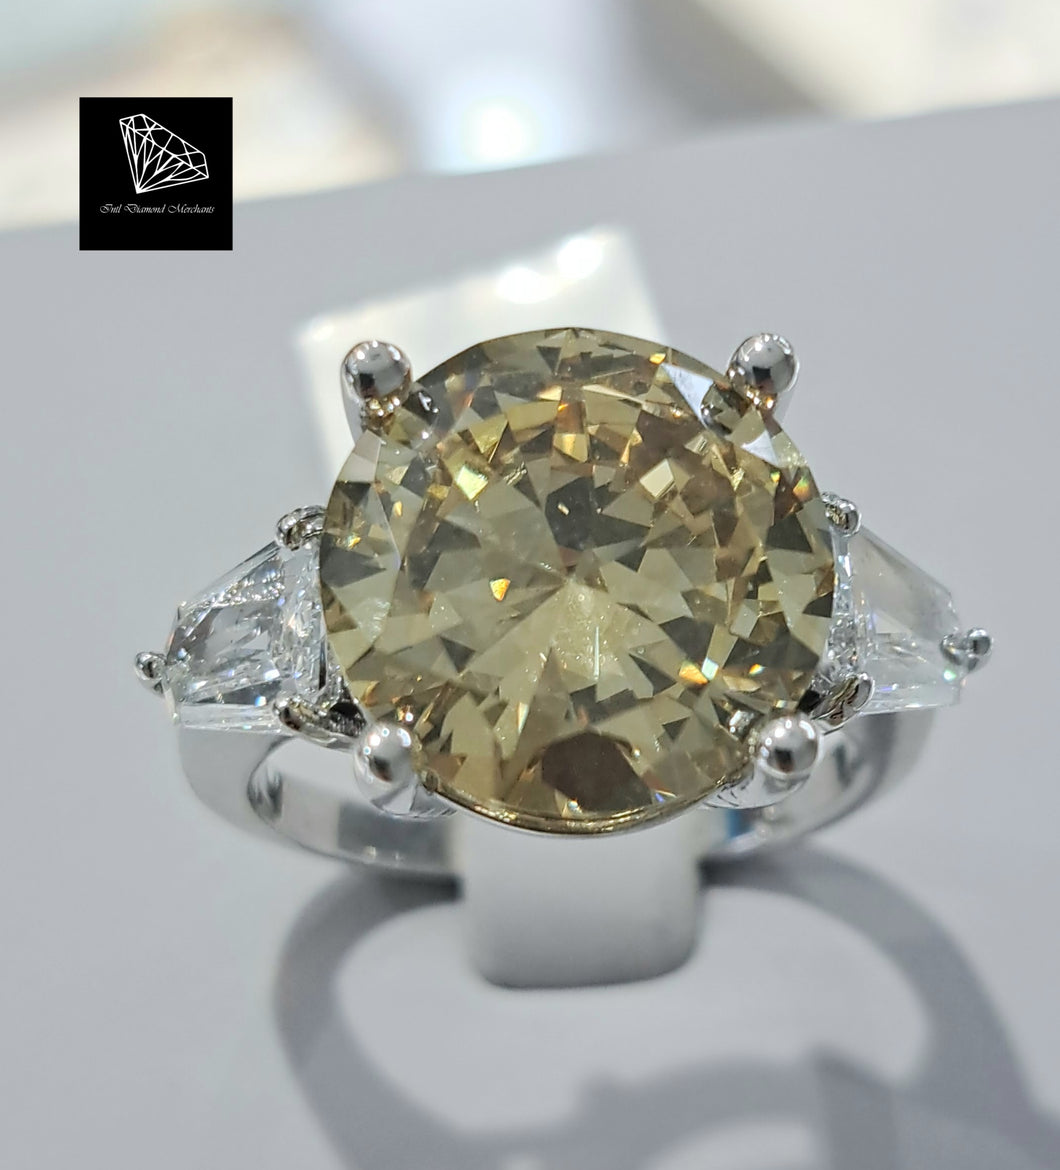 5.7470ct Round Brilliant Cut Certified Centre Diamond | 0.76cts [2] Bullet Cut Diamonds | Designer Trilogy Ring | 18kt White Gold